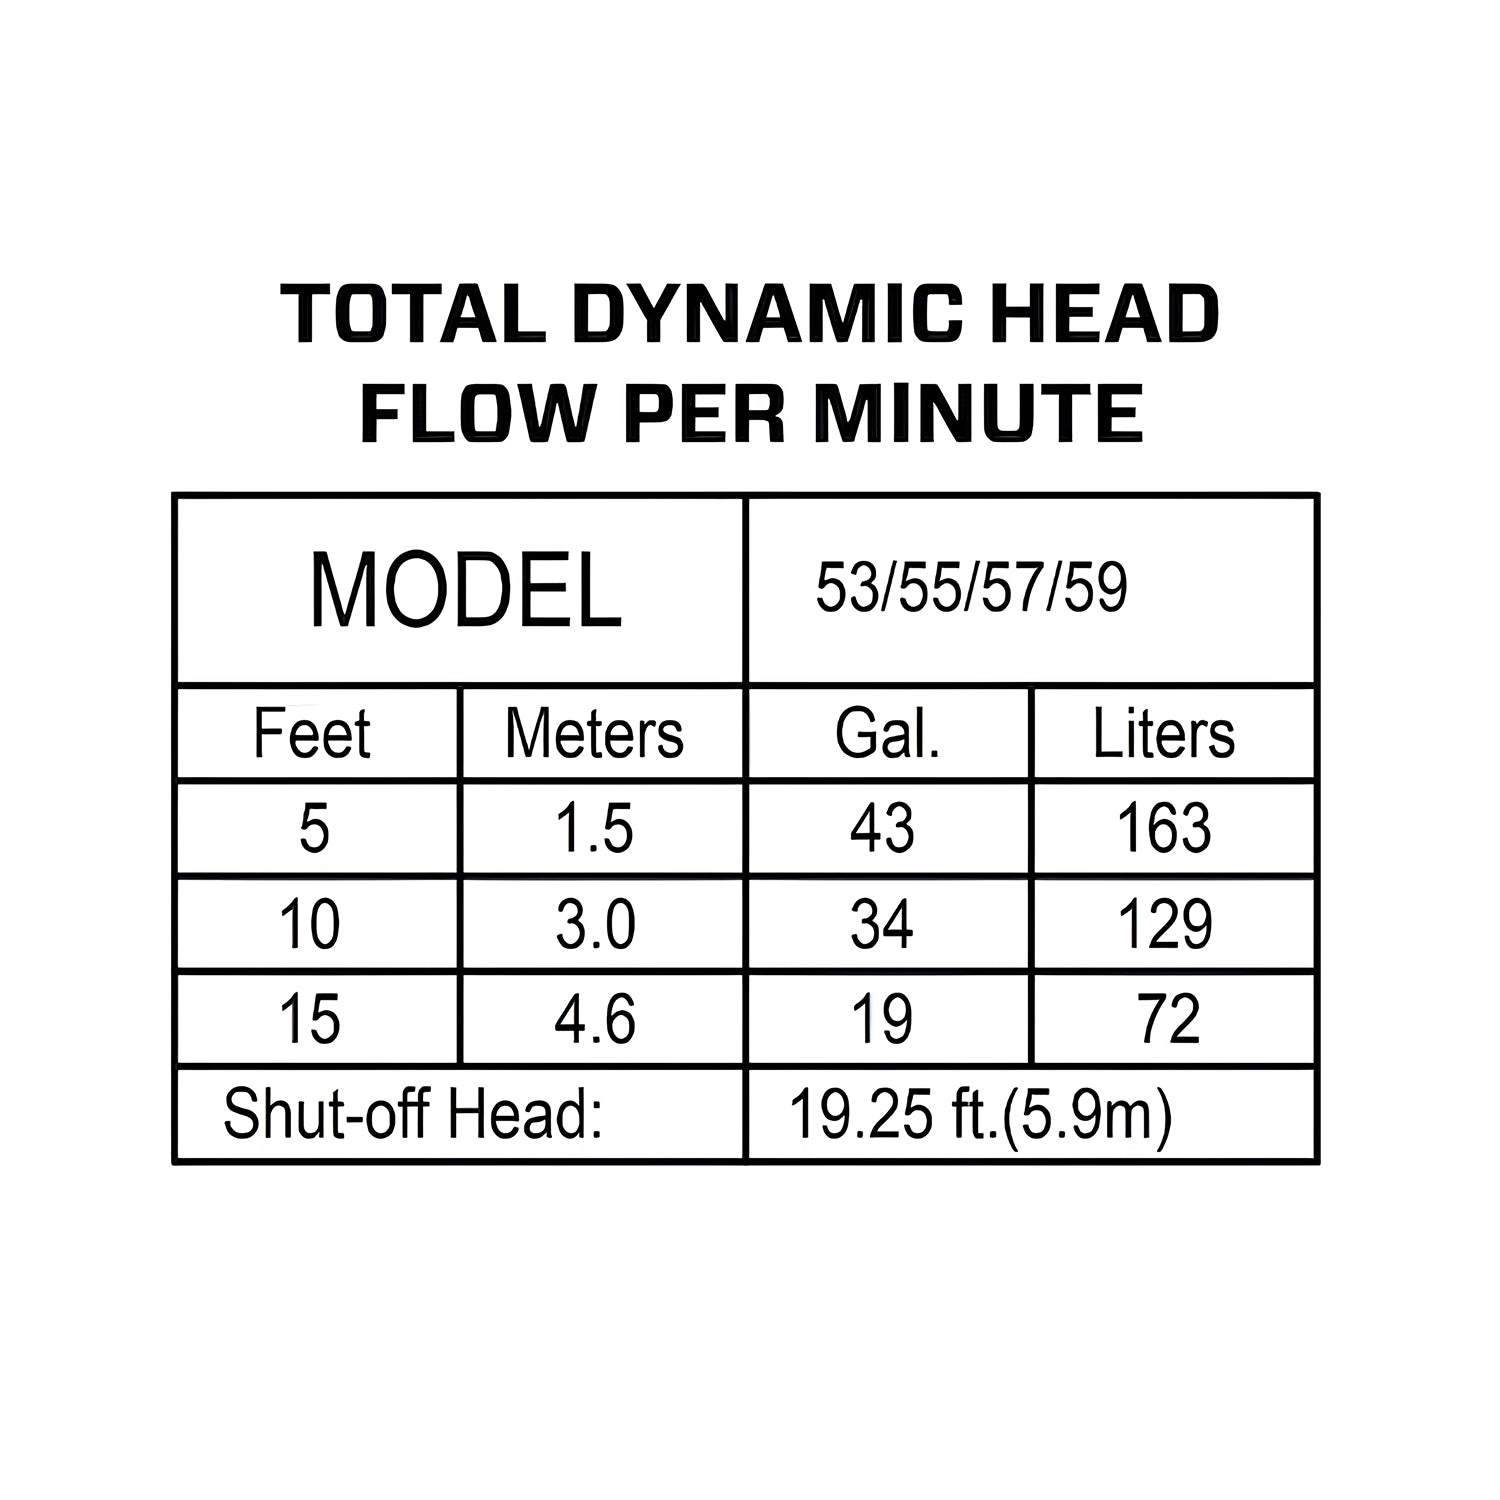 Total dynamic head flower per minute